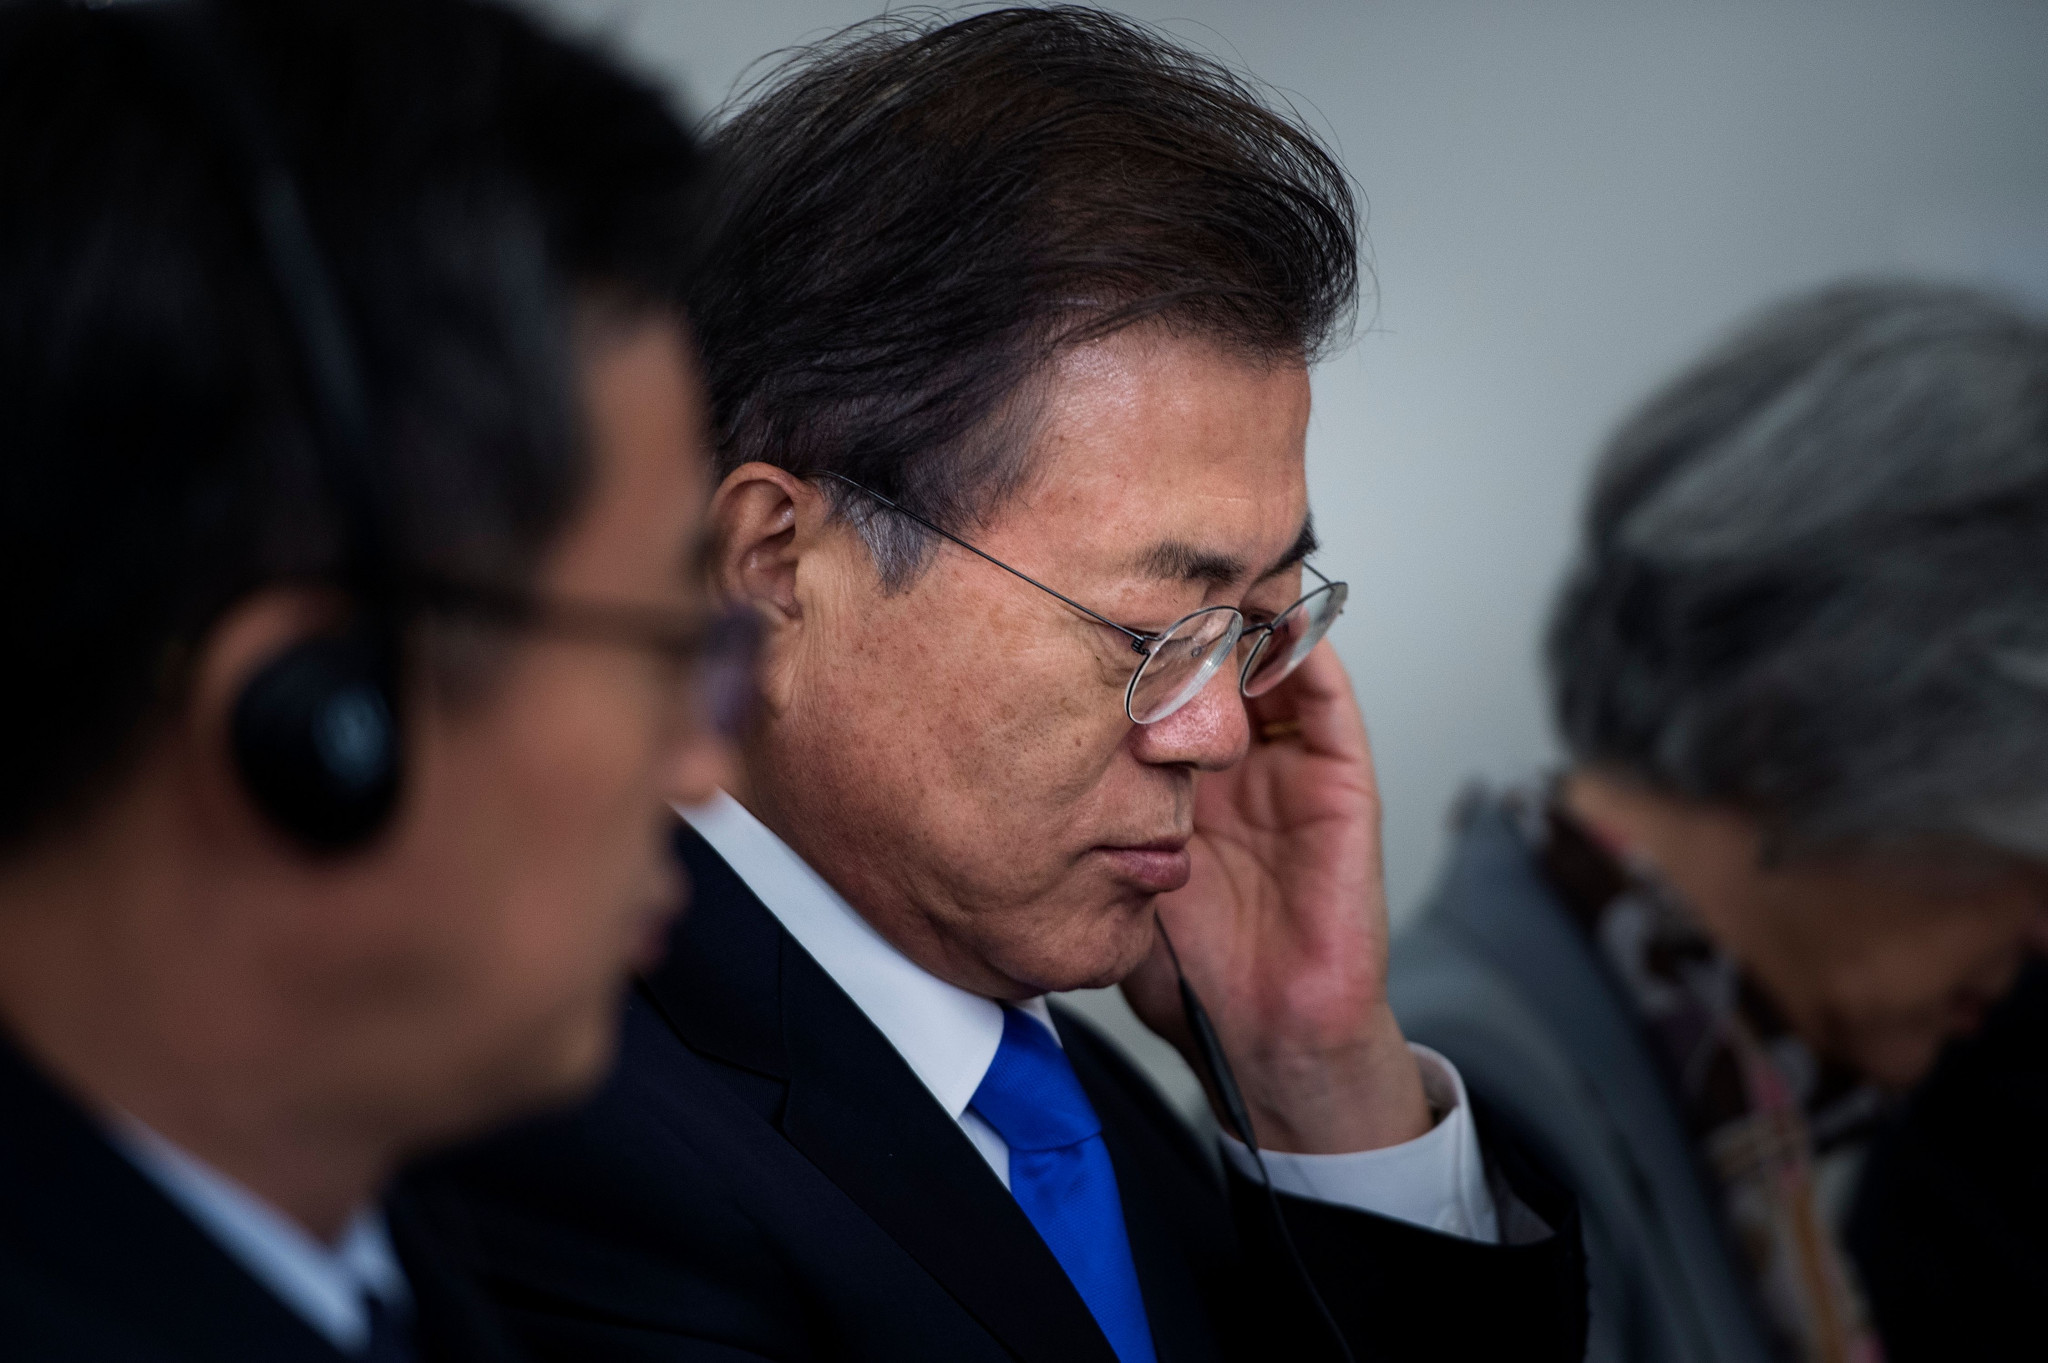 South Korean President hopeful Pyeongchang 2018 could host diplomatic talks in region